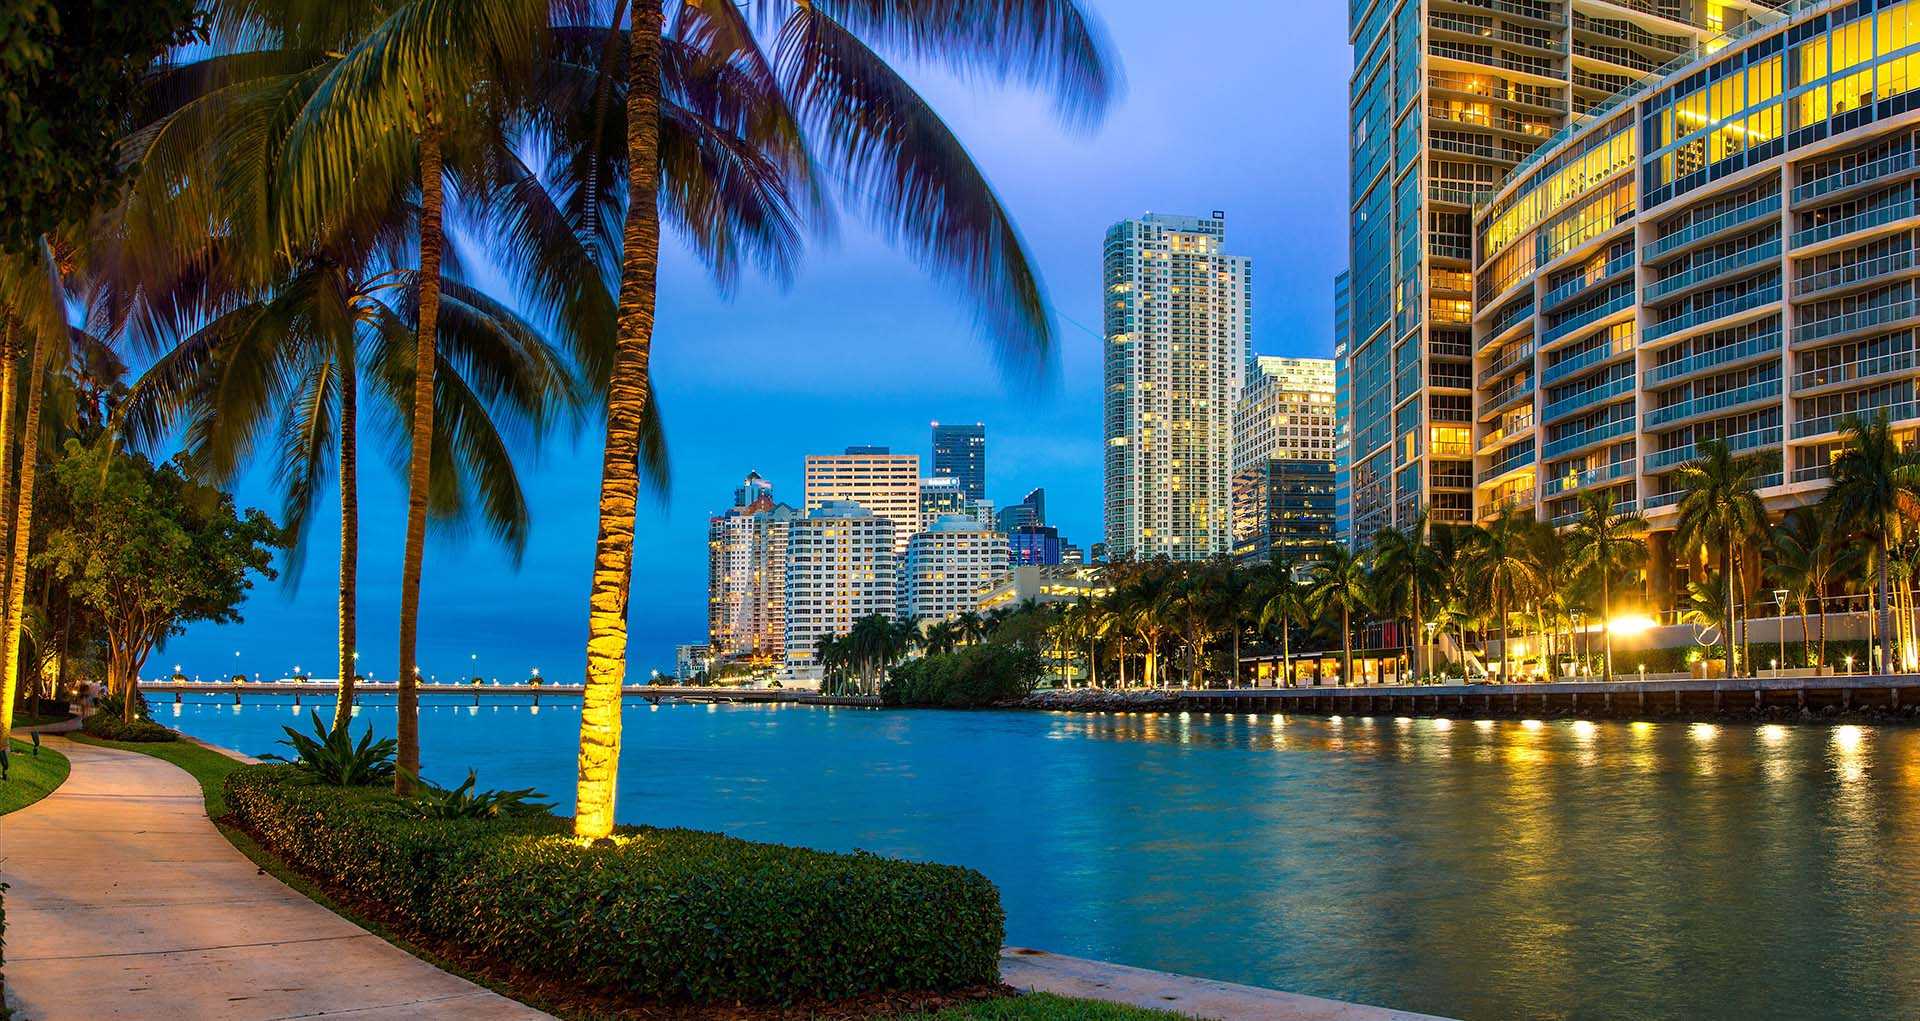 The City of Miami Beach, Florida